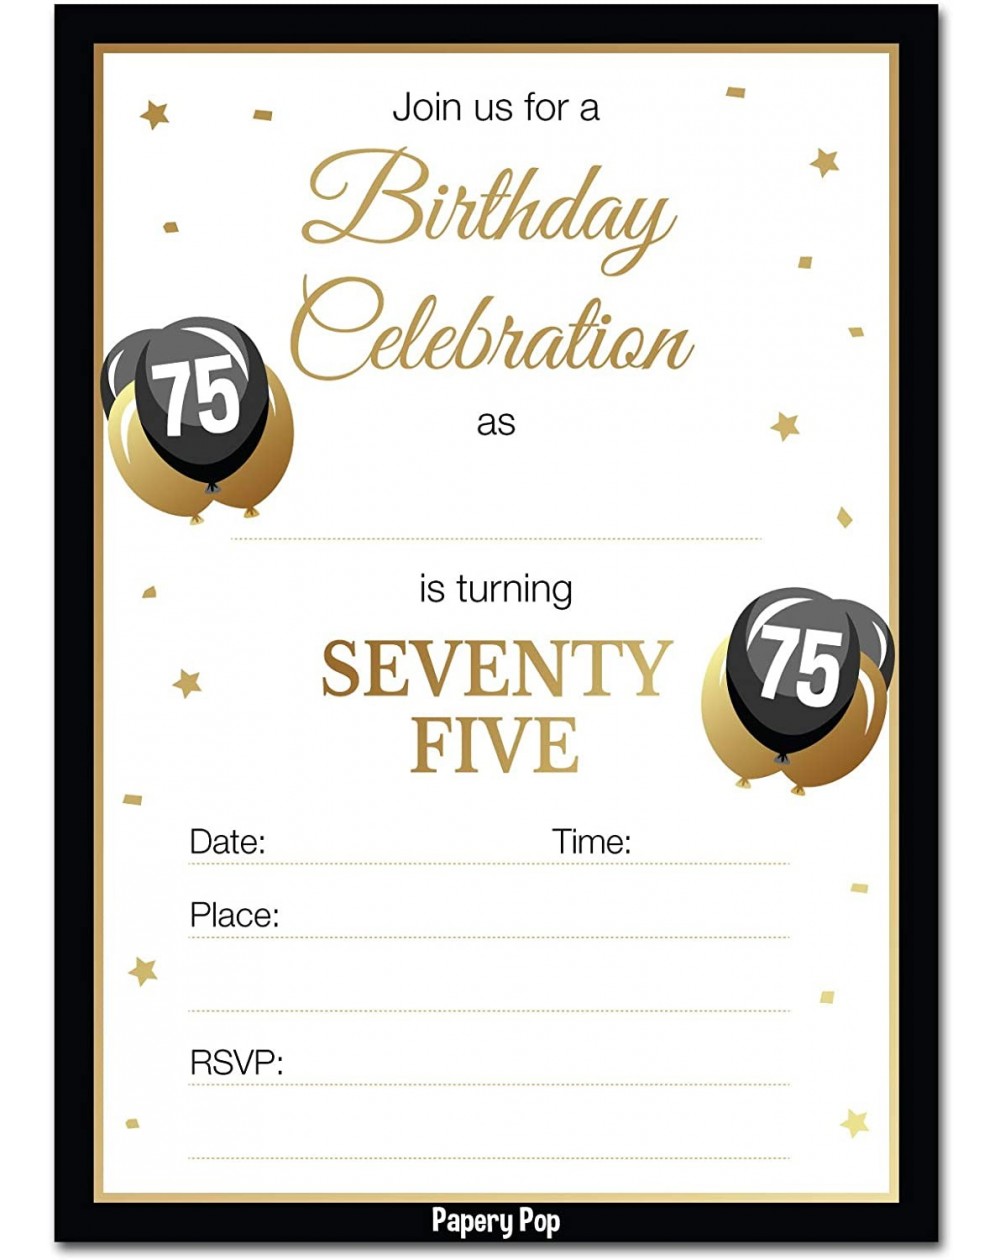 Invitations 75th Birthday Invitations with Envelopes (30 Count) - 75 Seventy-Five Year Old Anniversary Party Celebration Invi...